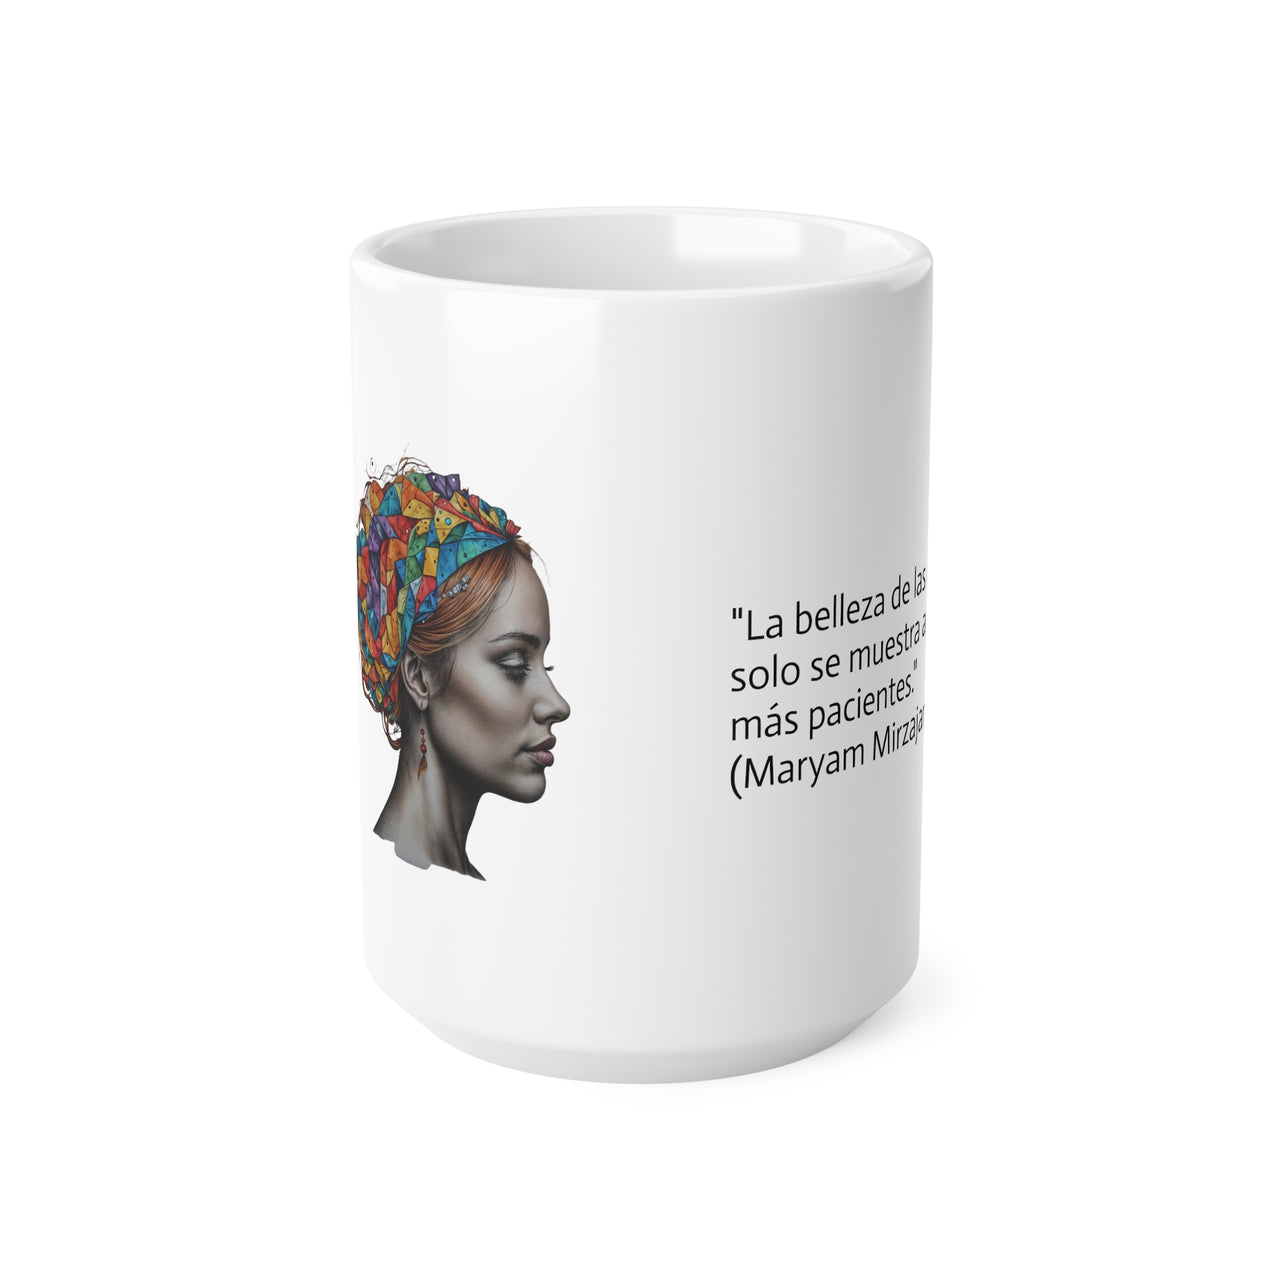 Taza de Maryam Mirzajani, Taza de café, Taza con frase matemática, 0.33 l, 0.44 l